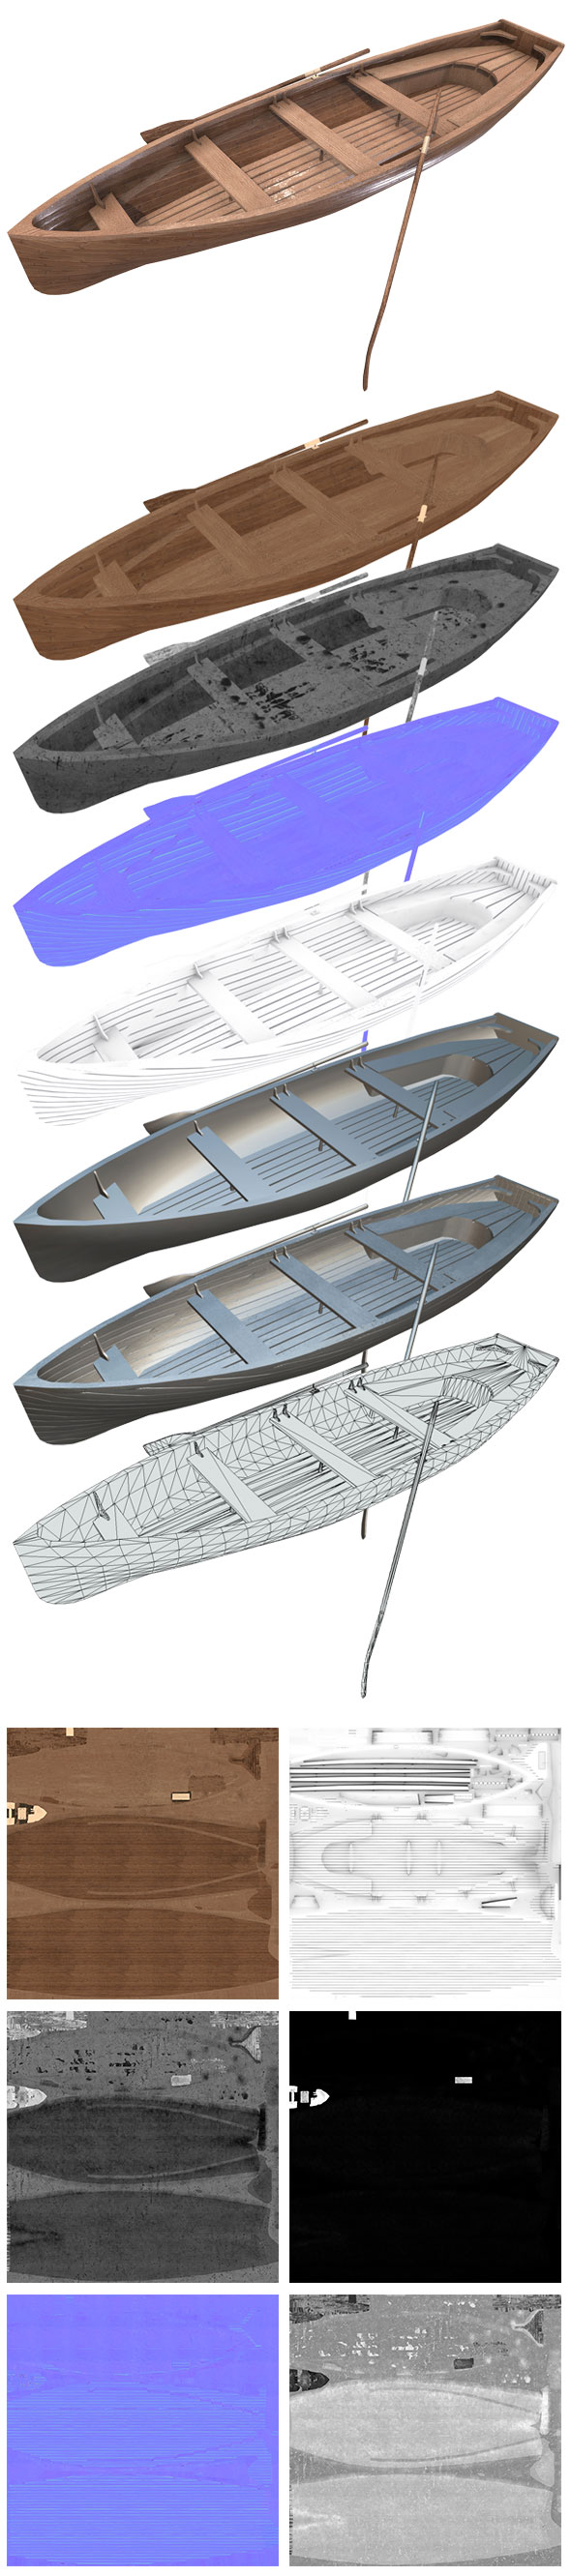 Wooden Boat - 3Docean 26405657